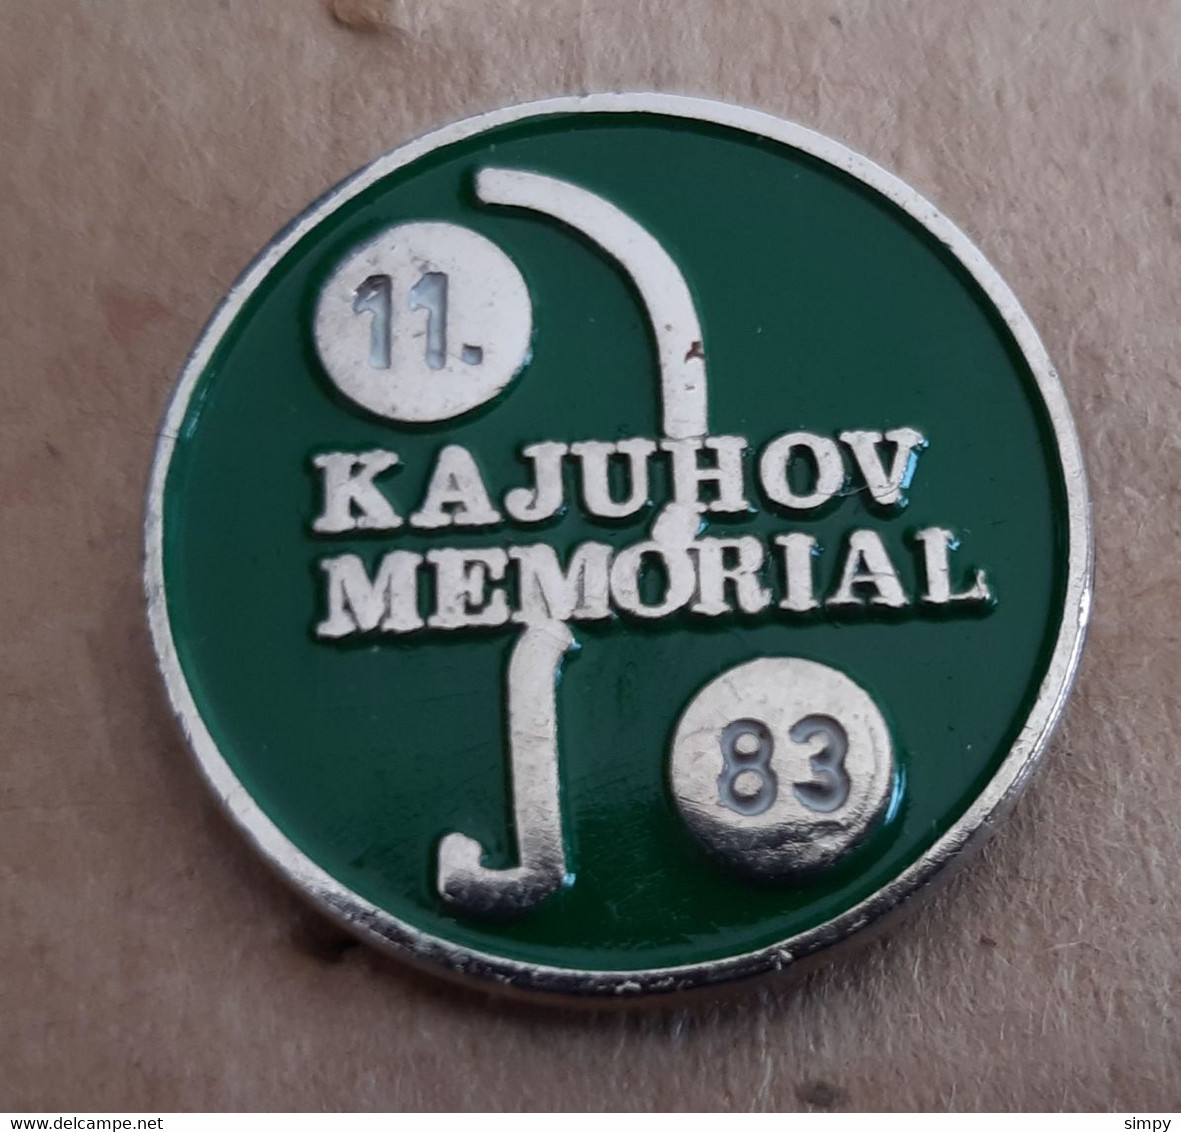 Table Tennis Tournament 11. Kajuhov Memorial  1983 Slovenia Pin Badge - Tennis Tavolo